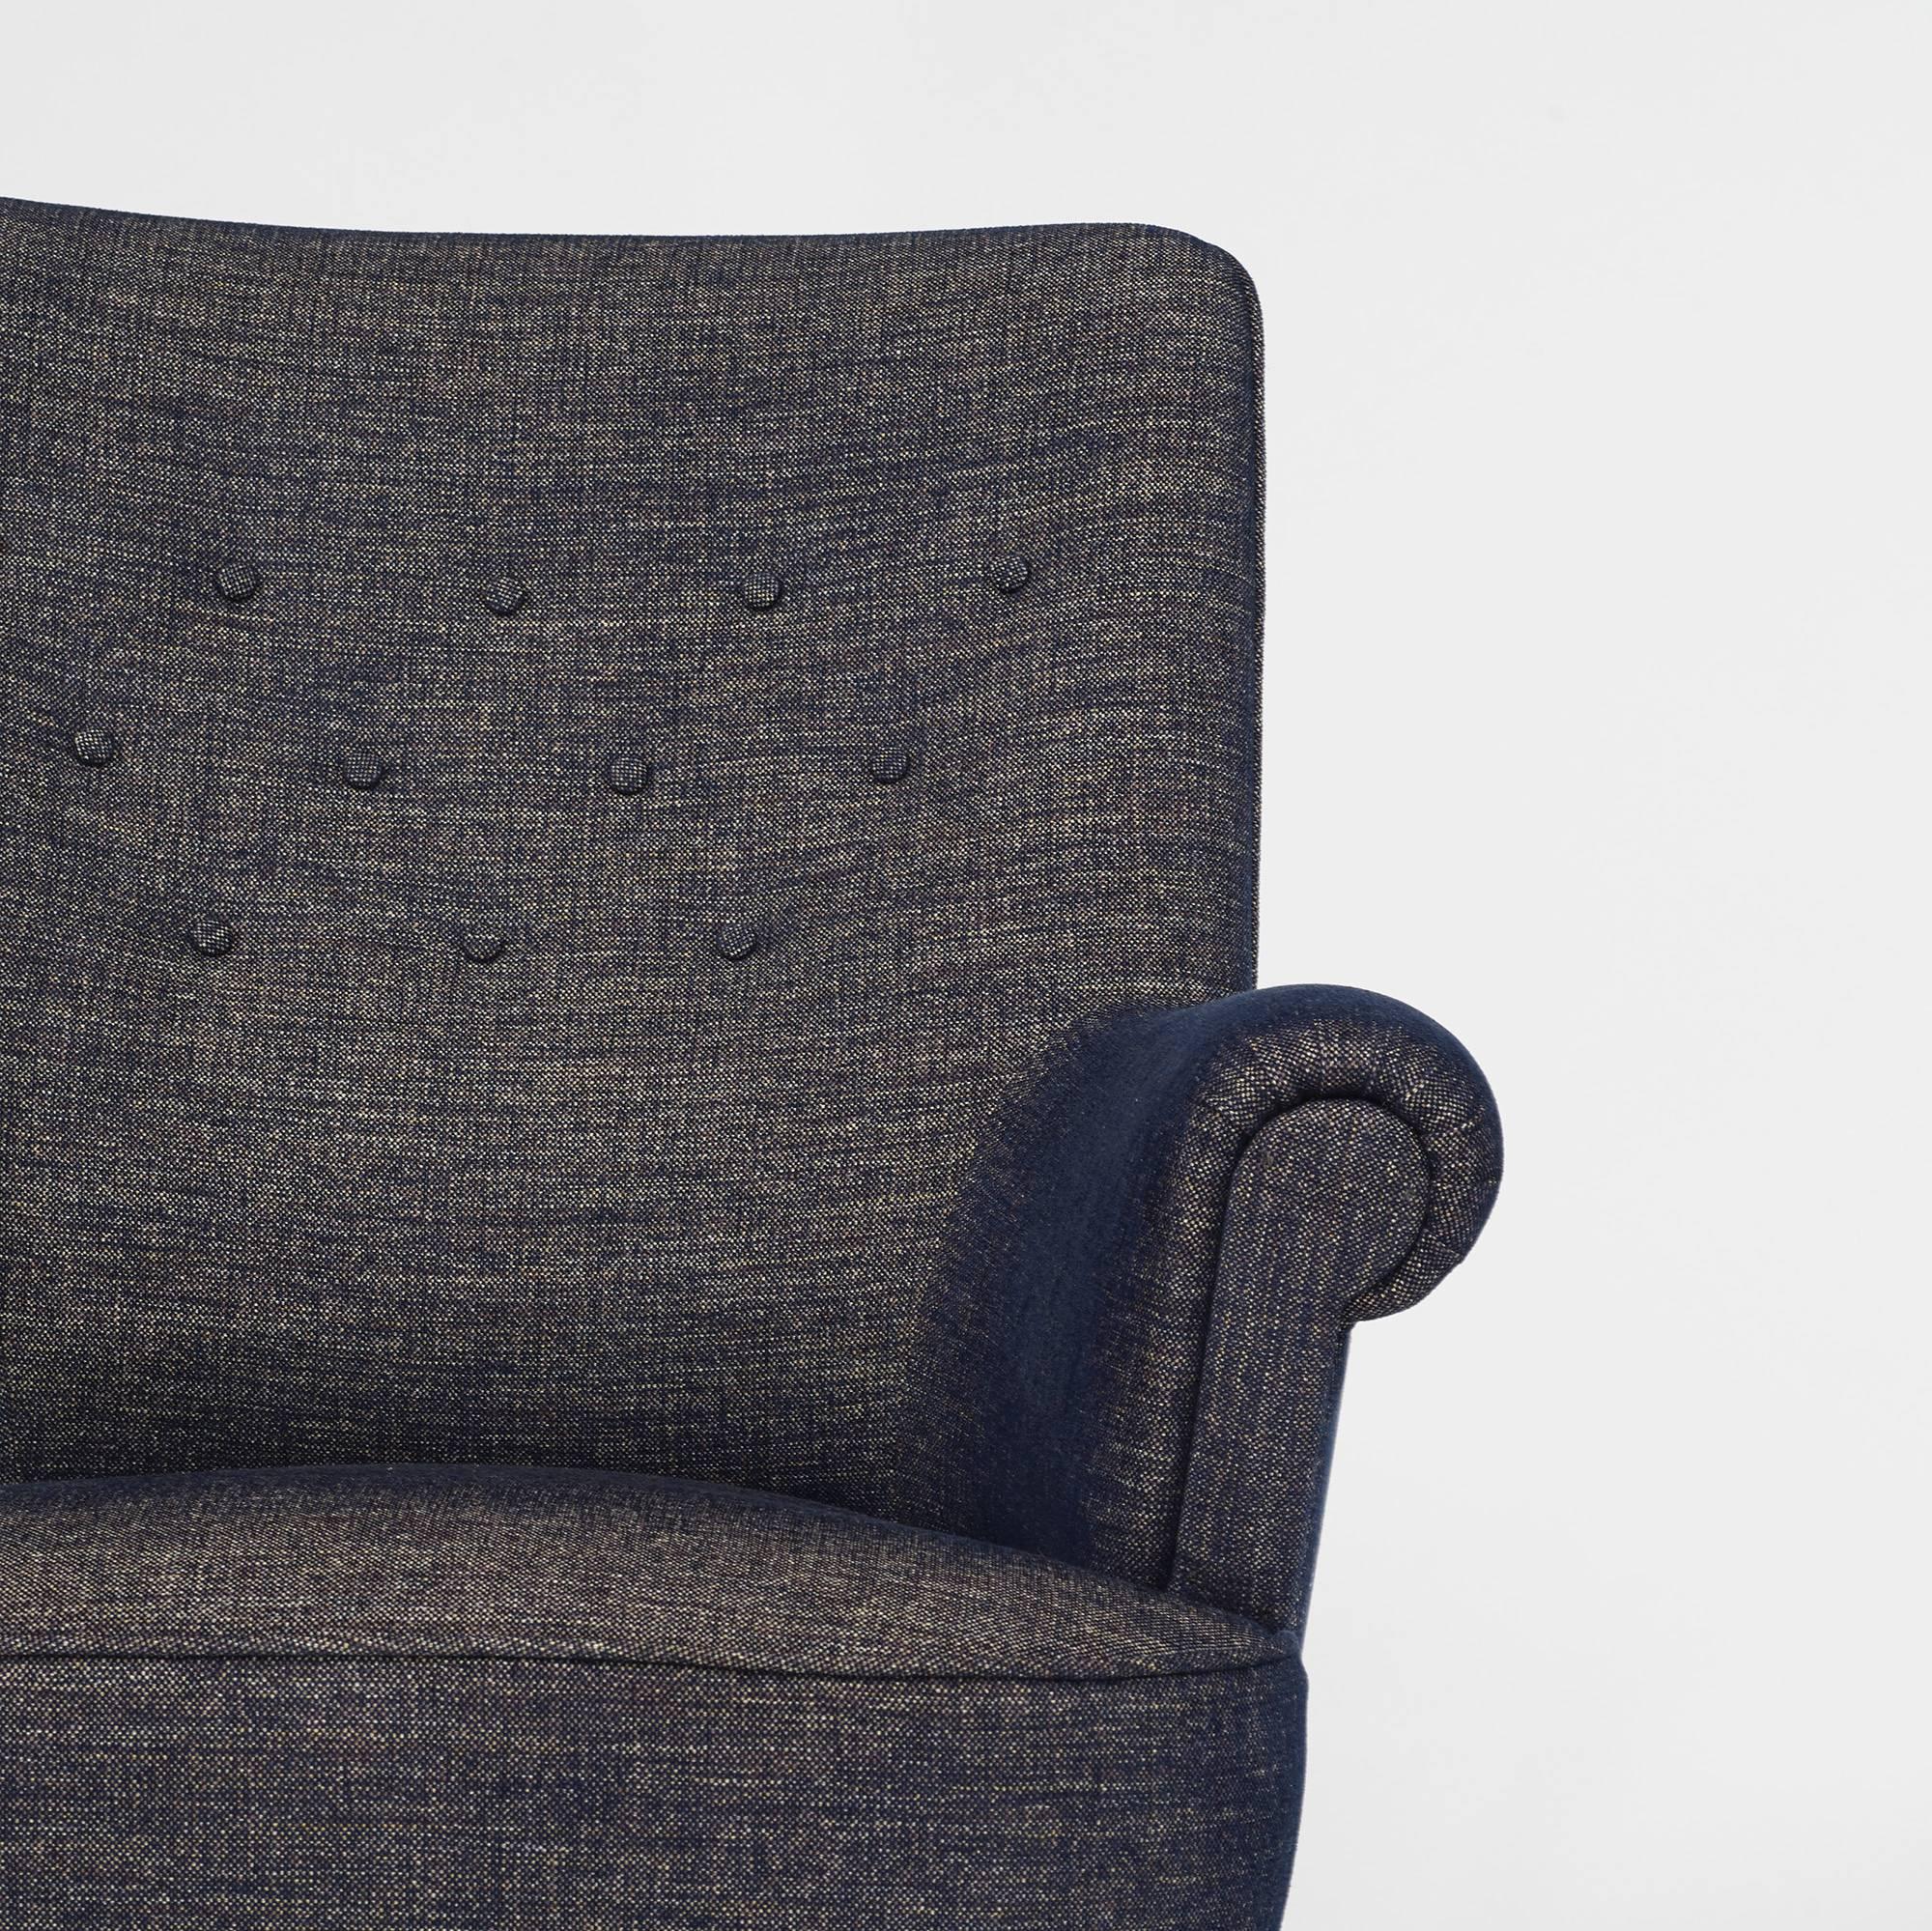 Swedish Pair of Lounge Chairs by Carl Malmsten for O.H. SjöGren